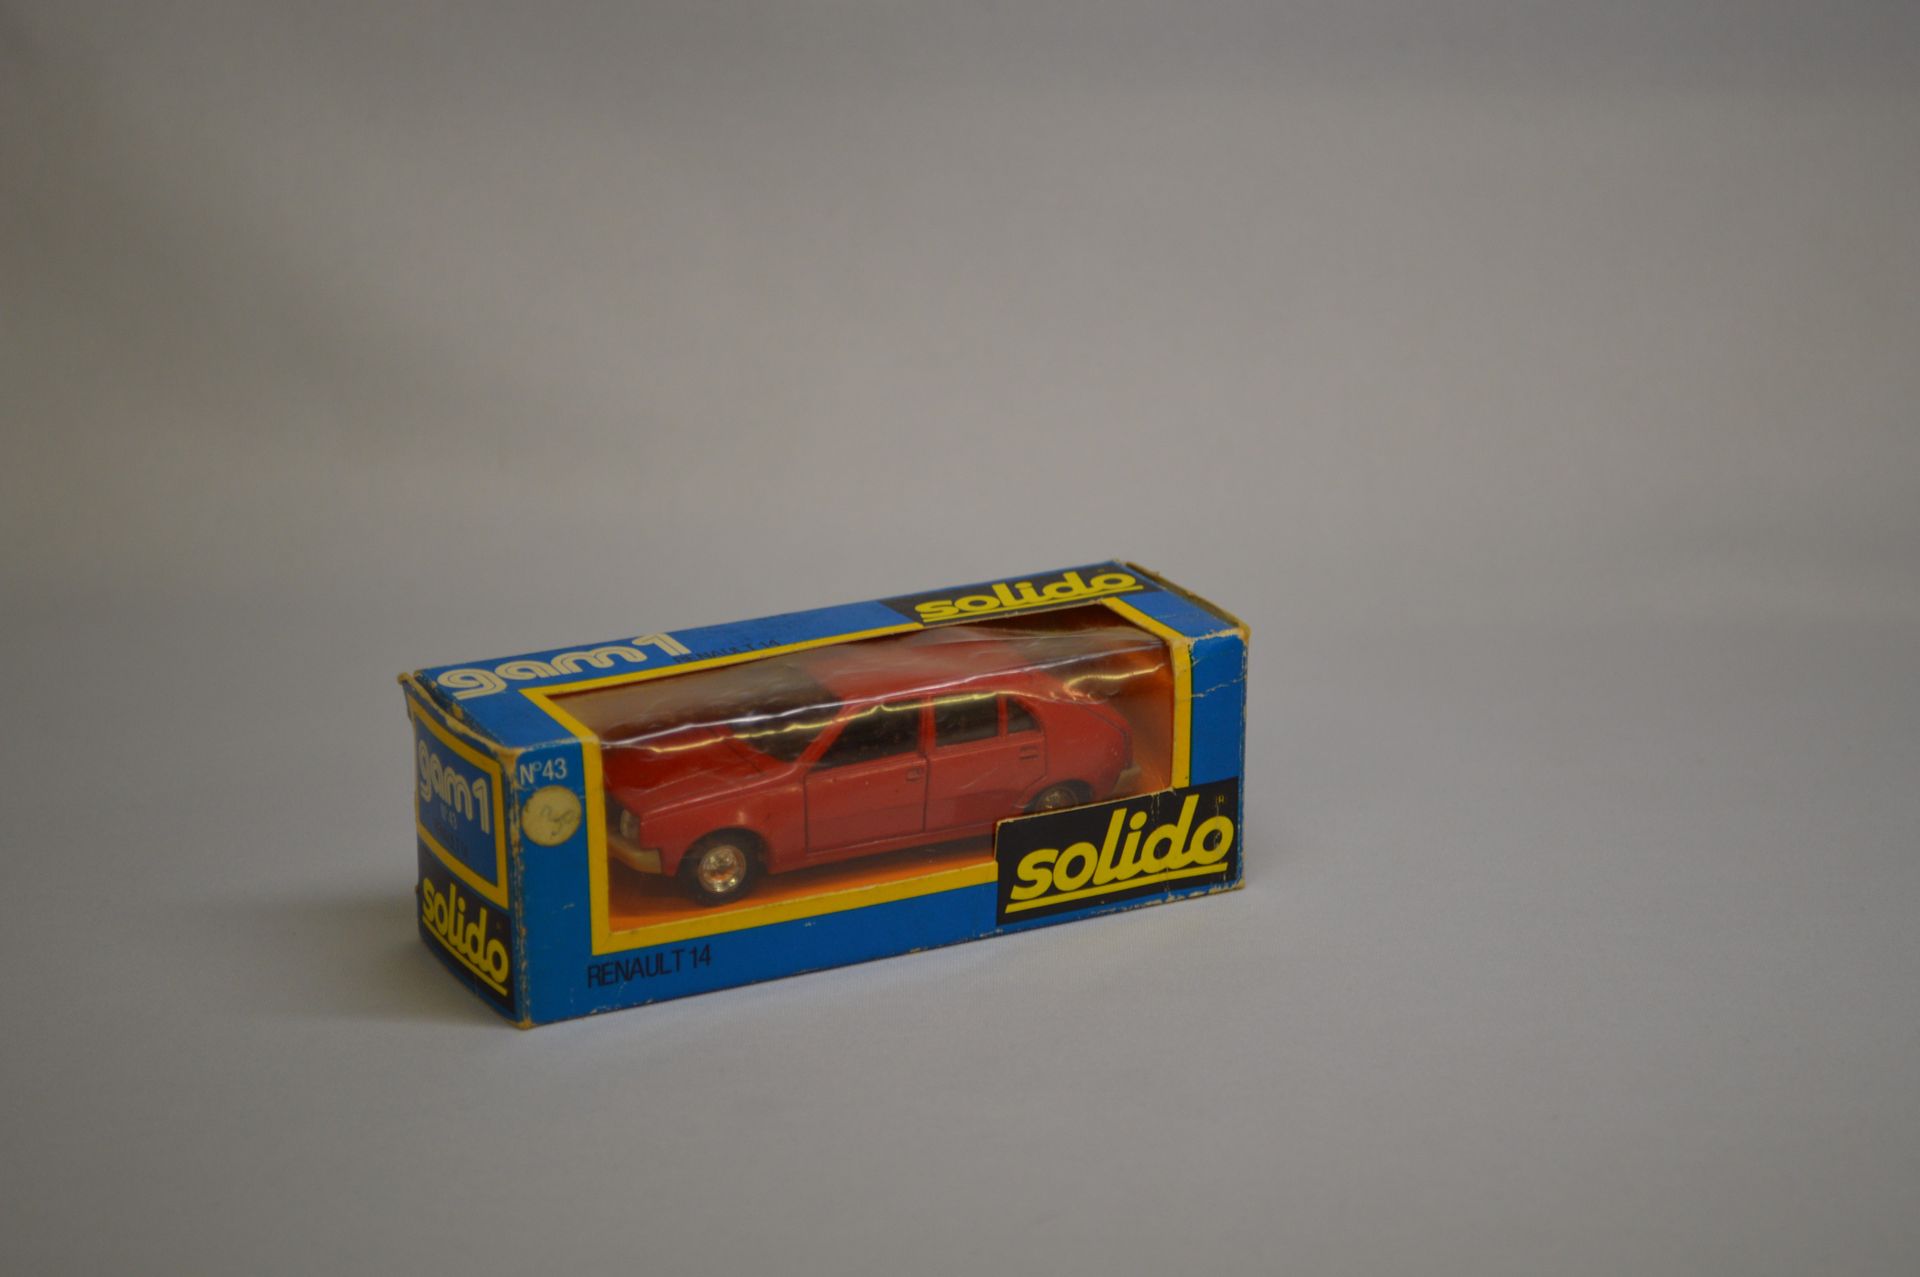 Null SOLIDO - GAM 1 - Personenwagen : Renault 14, n°43, rot.

Originale Box. Her&hellip;